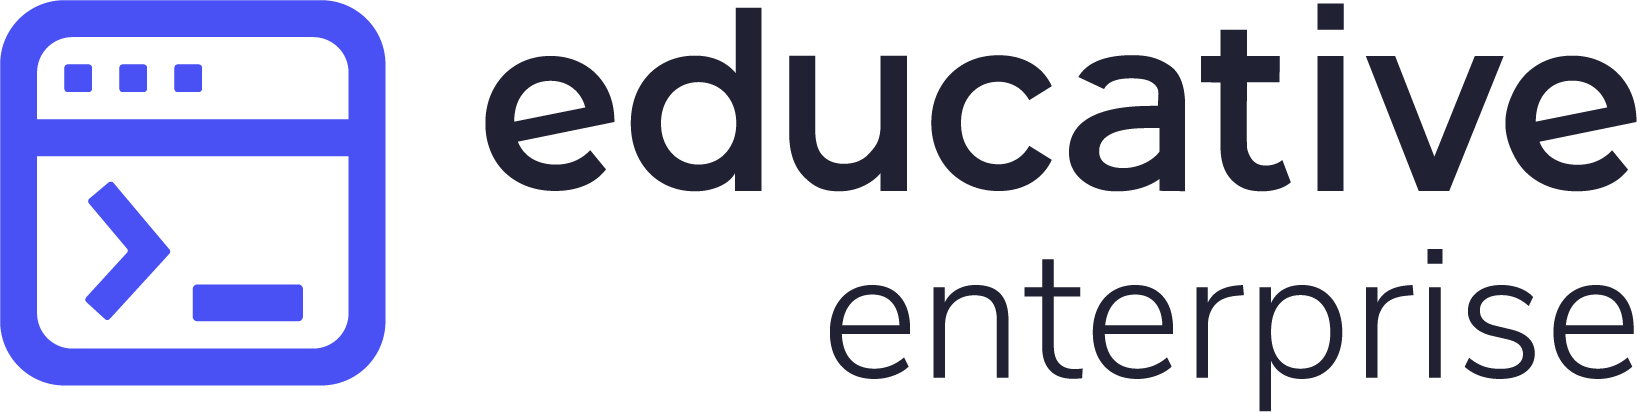 Educative Enterprise Logo